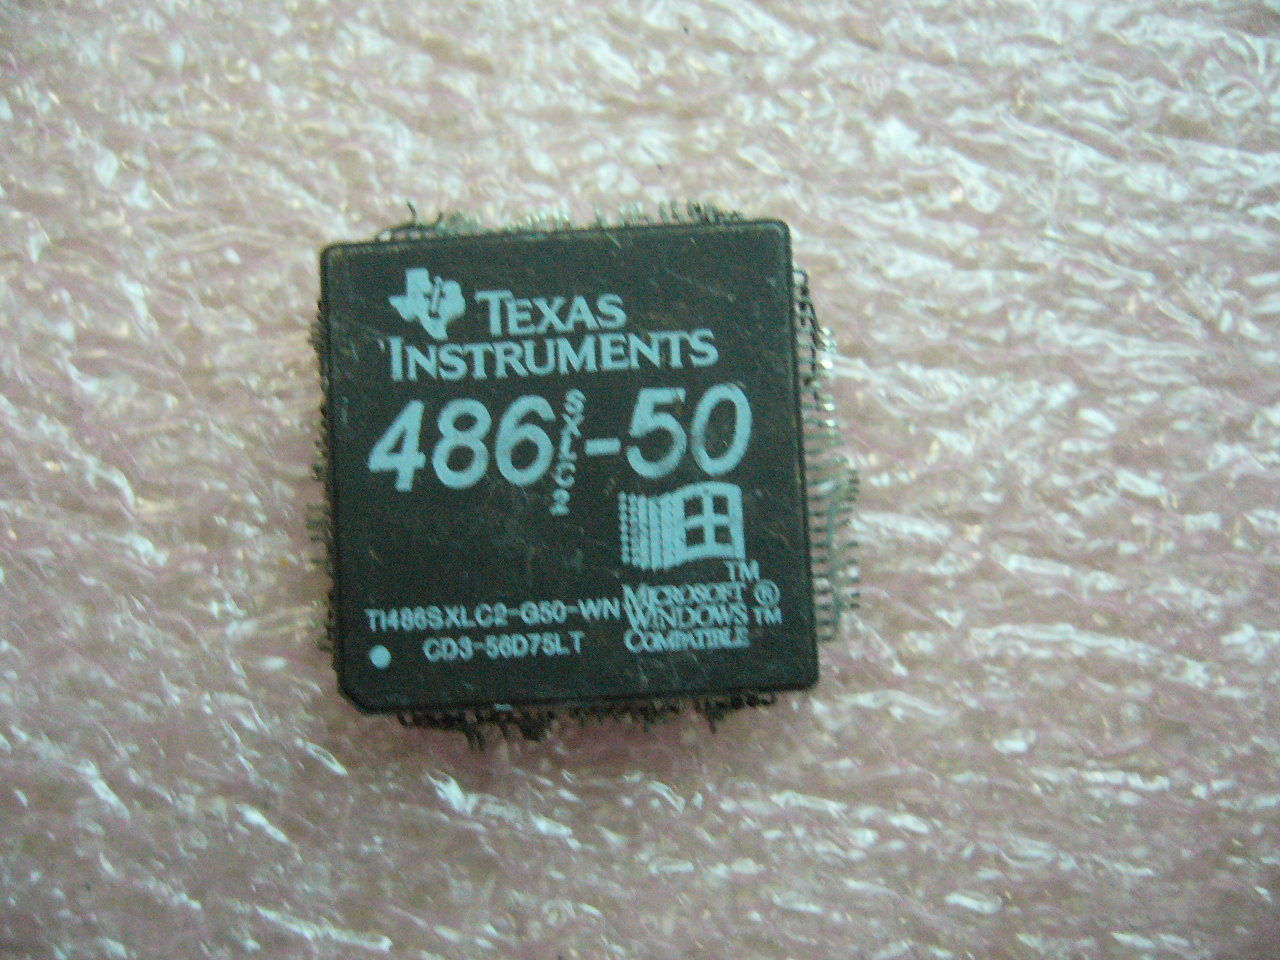 QTY 1x Vintage CPU TI486SXLC2-G50-WN